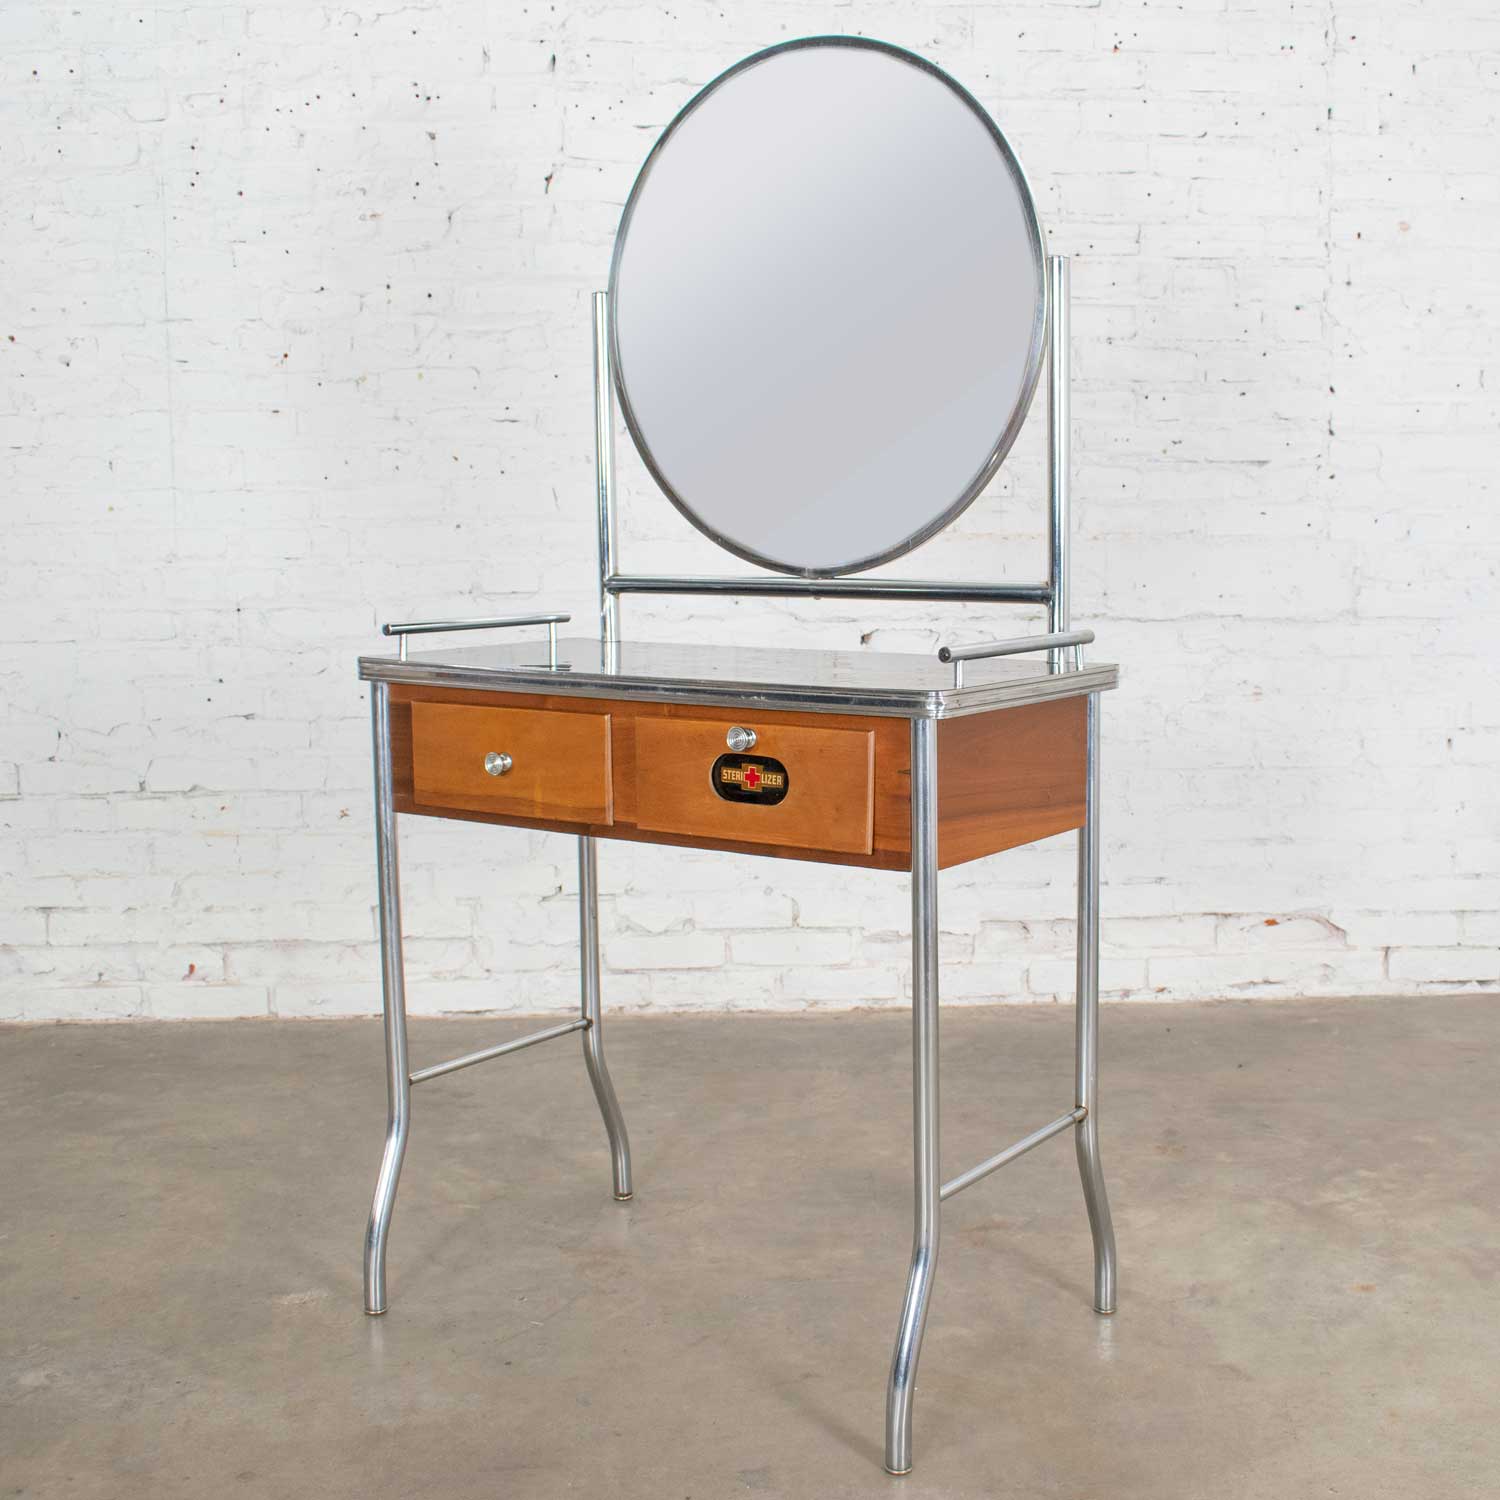 Art Deco Streamline Modern Machine Age Chrome Maple & Black Make Up Beauty Barber Vanity with Mirror